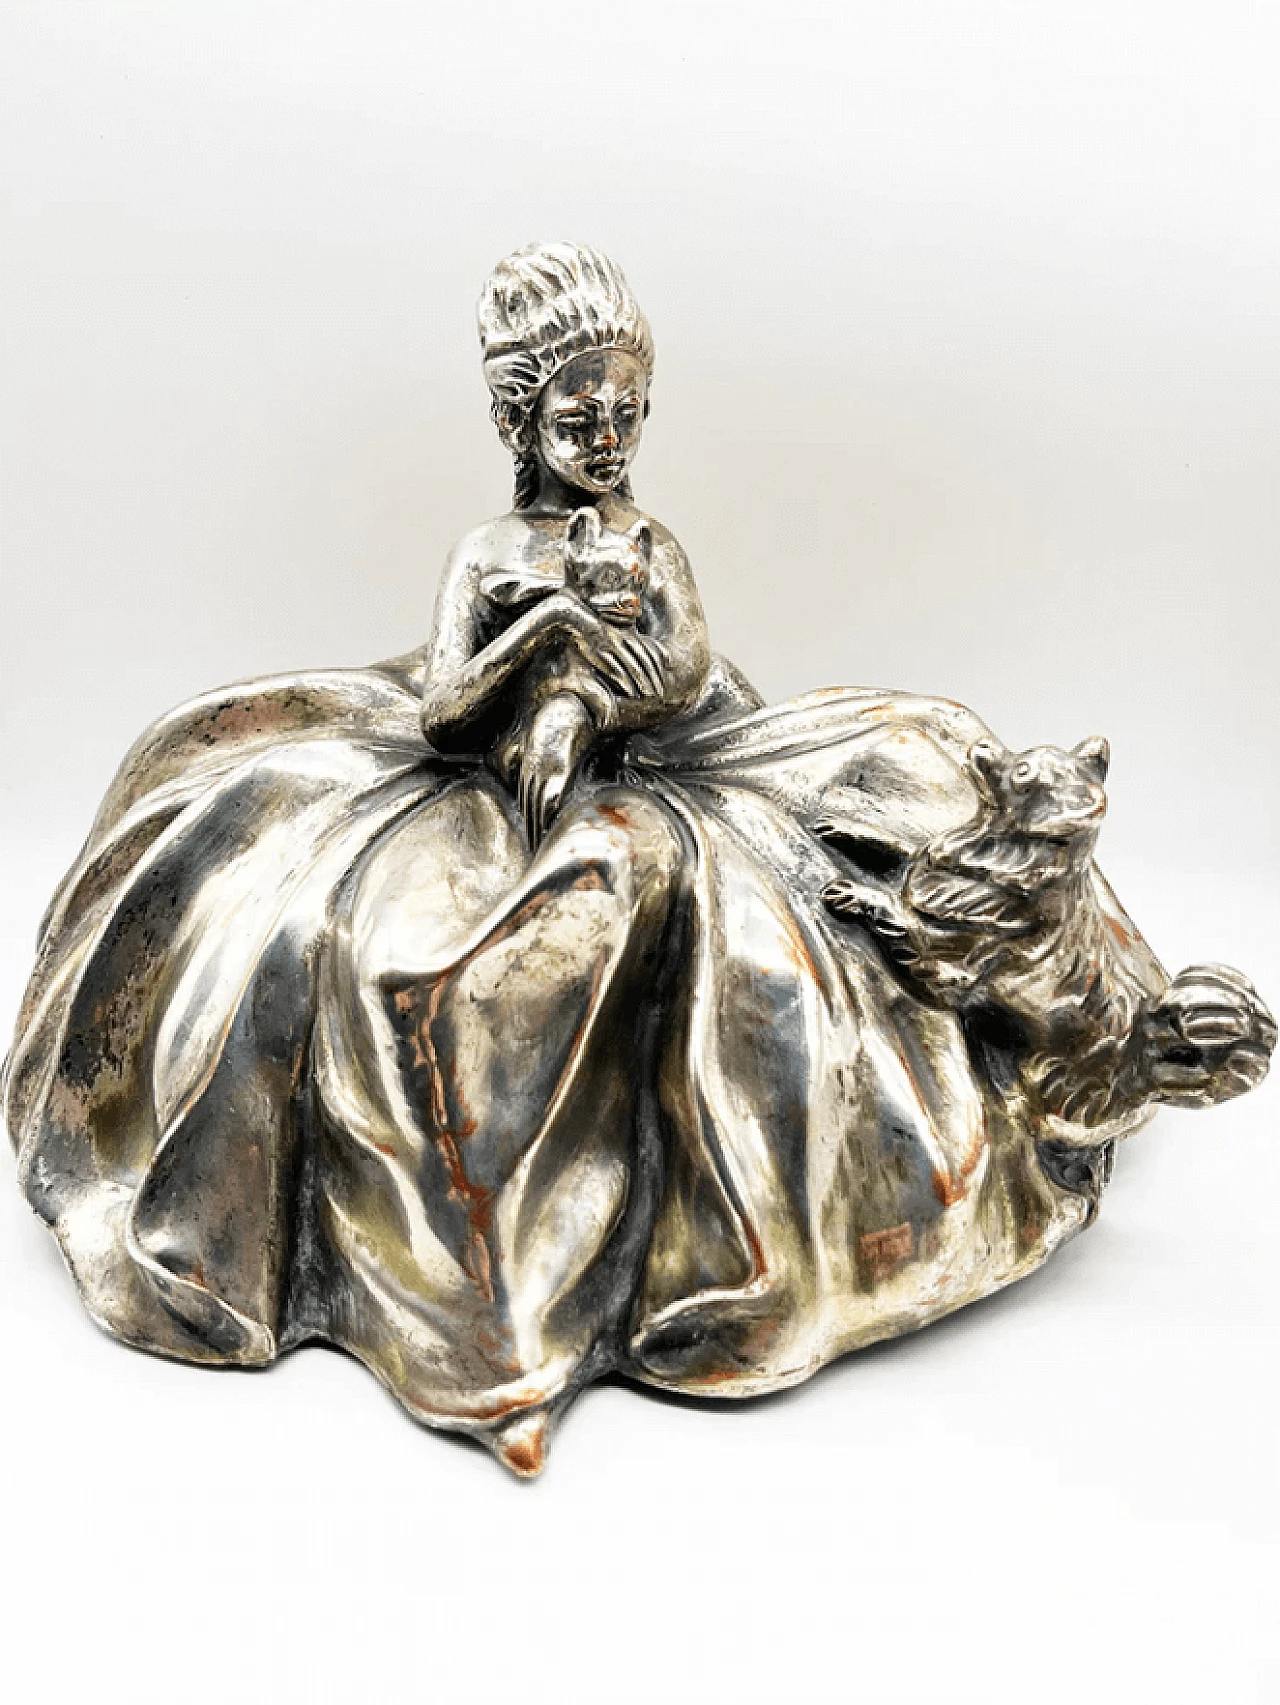 Dama in terracotta and silver by Salvatore Cipolla, 1950s 1